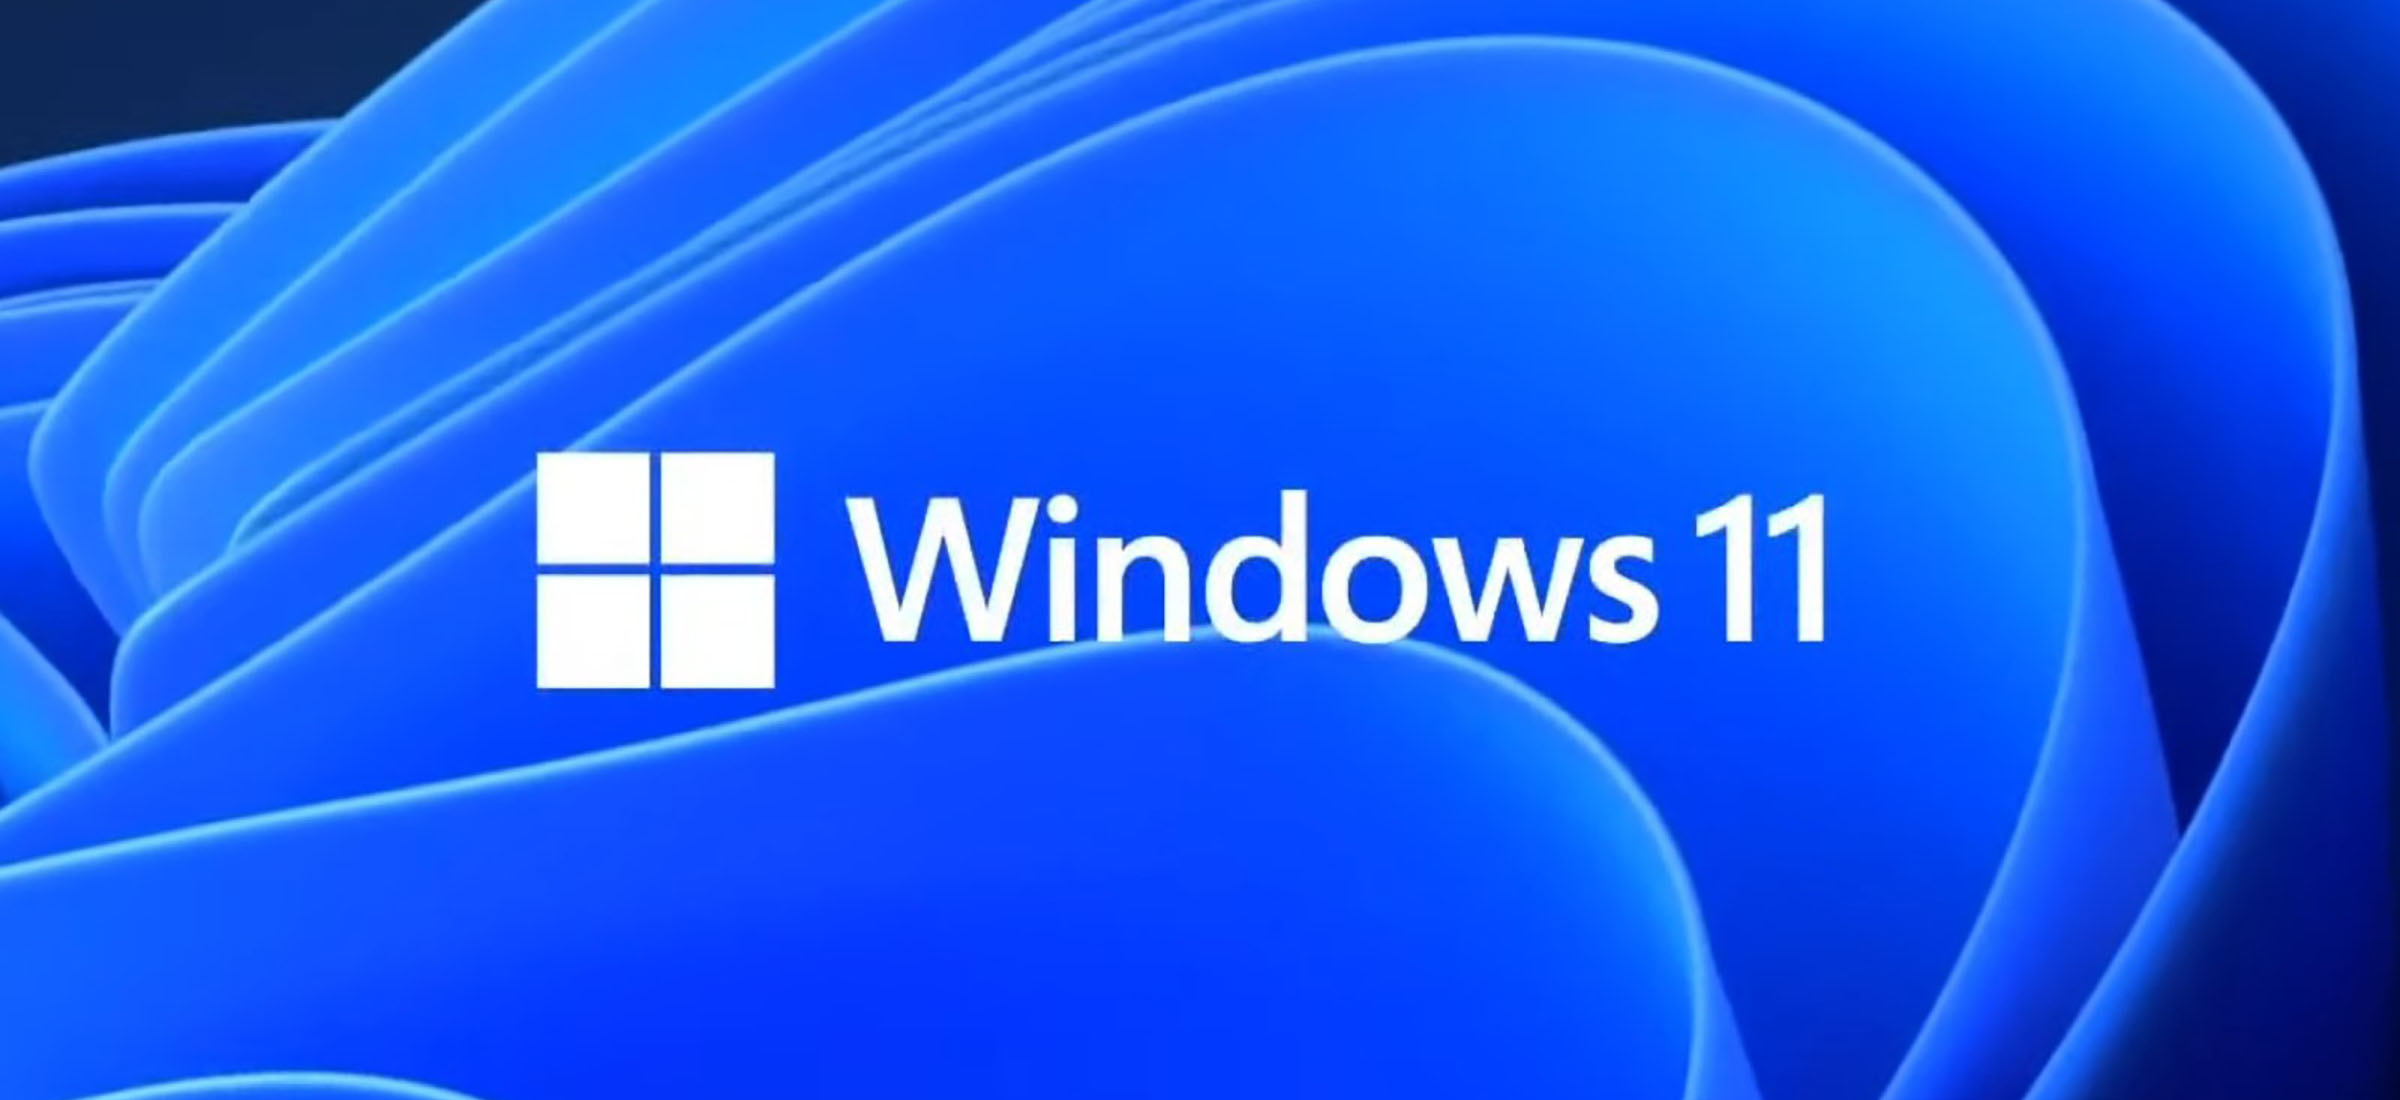 windows 11 tpm requirement